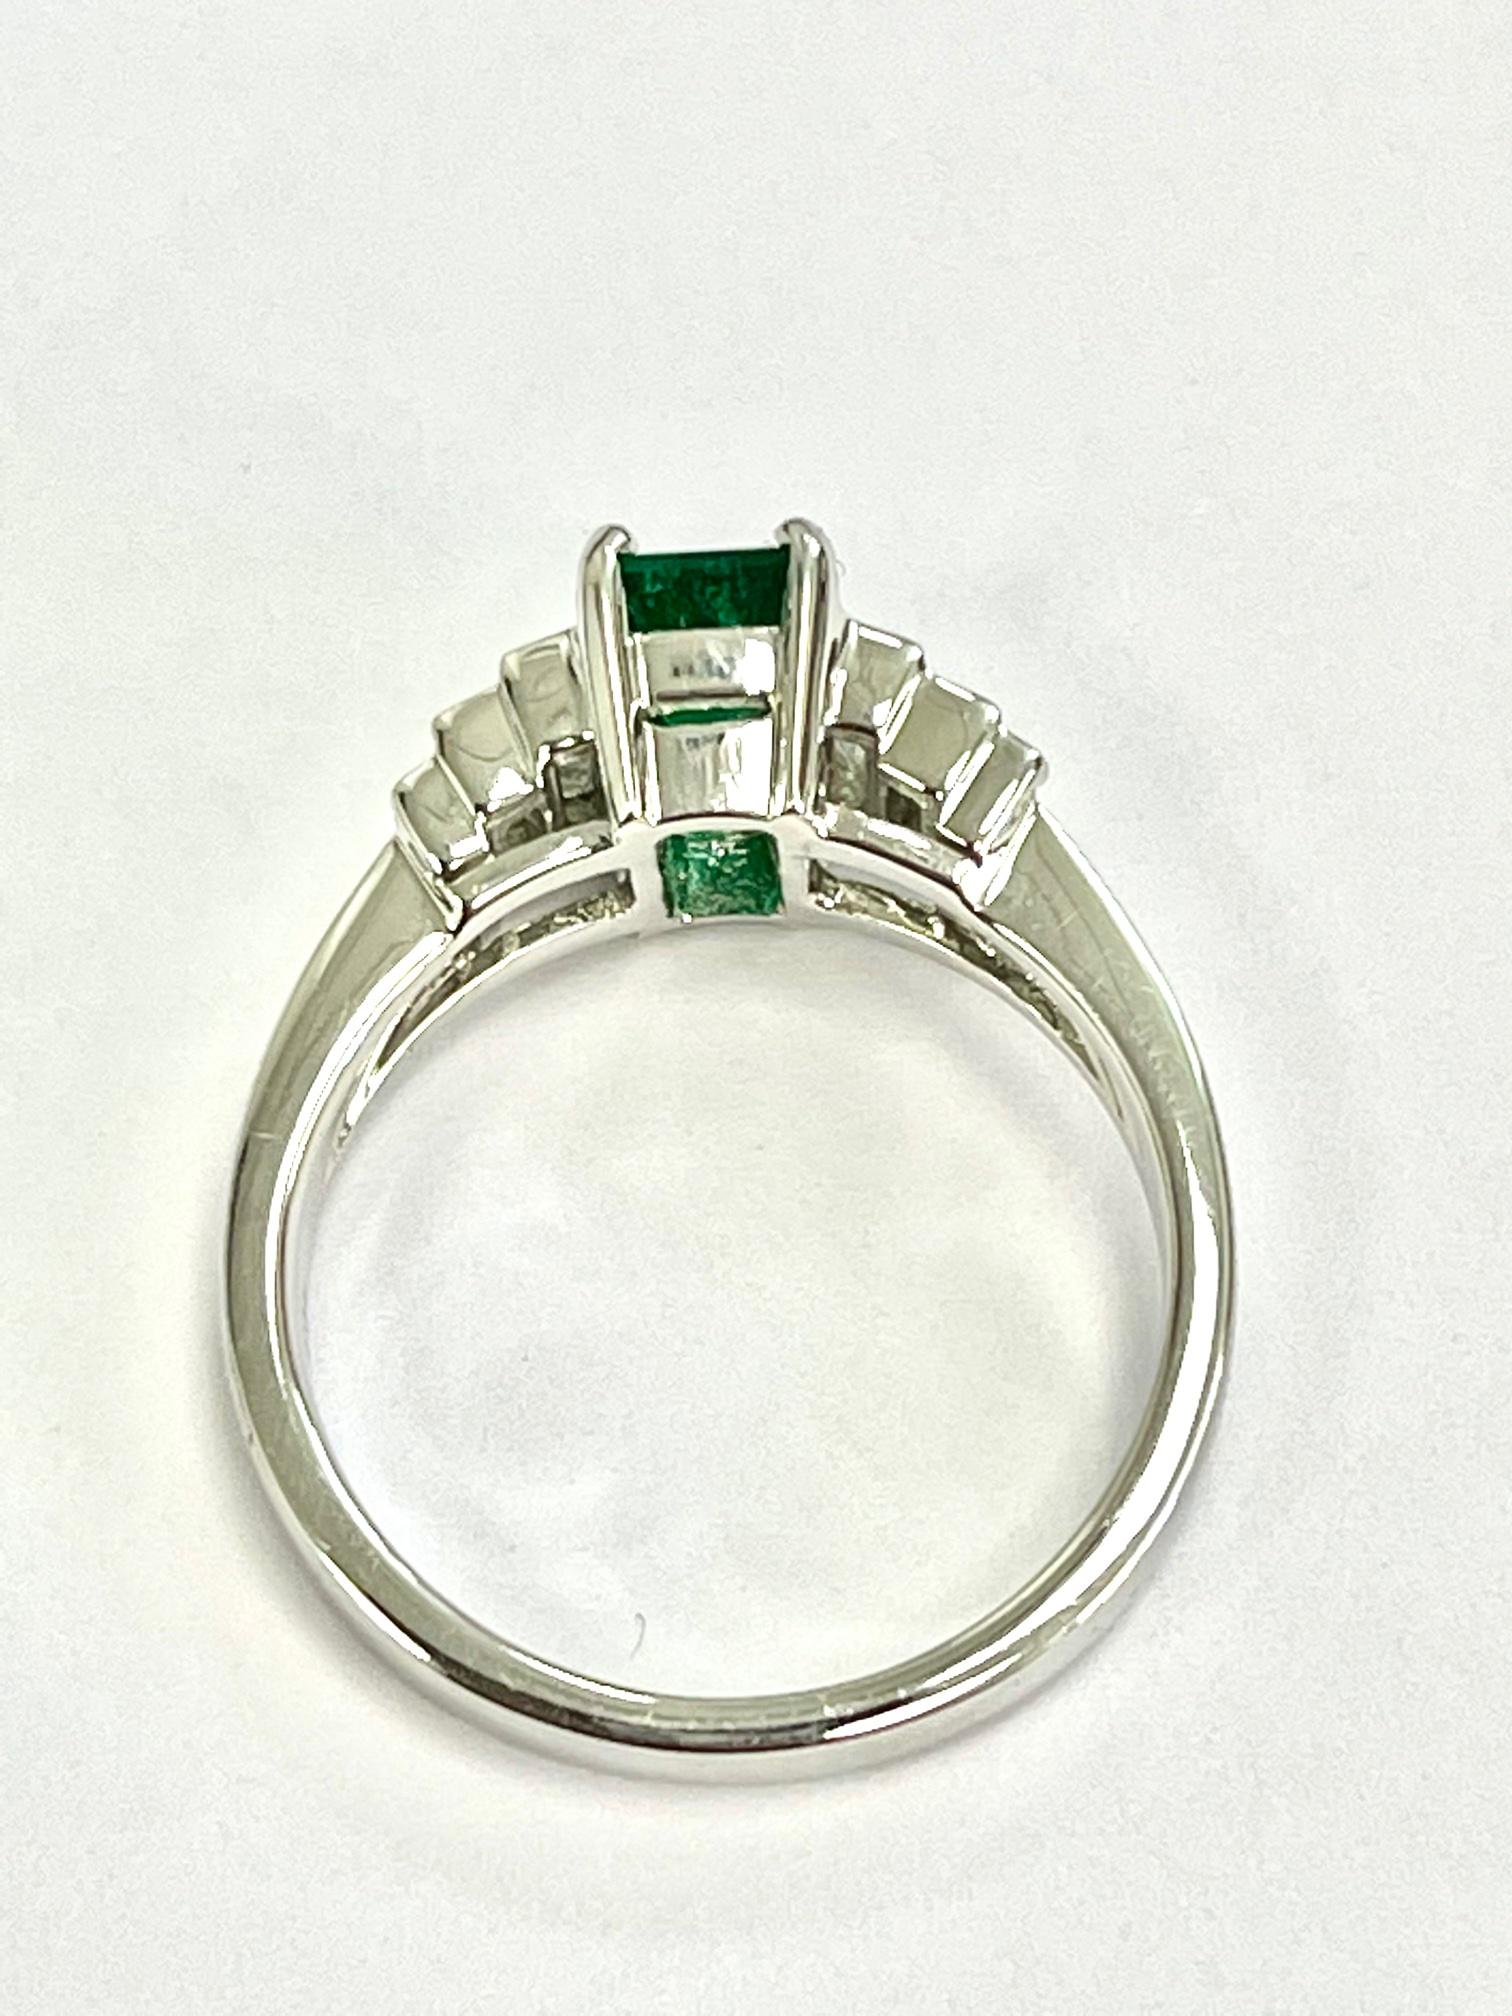 Emerald Cut 1.04 Carat Emerald Diamond Cocktail Ring For Sale